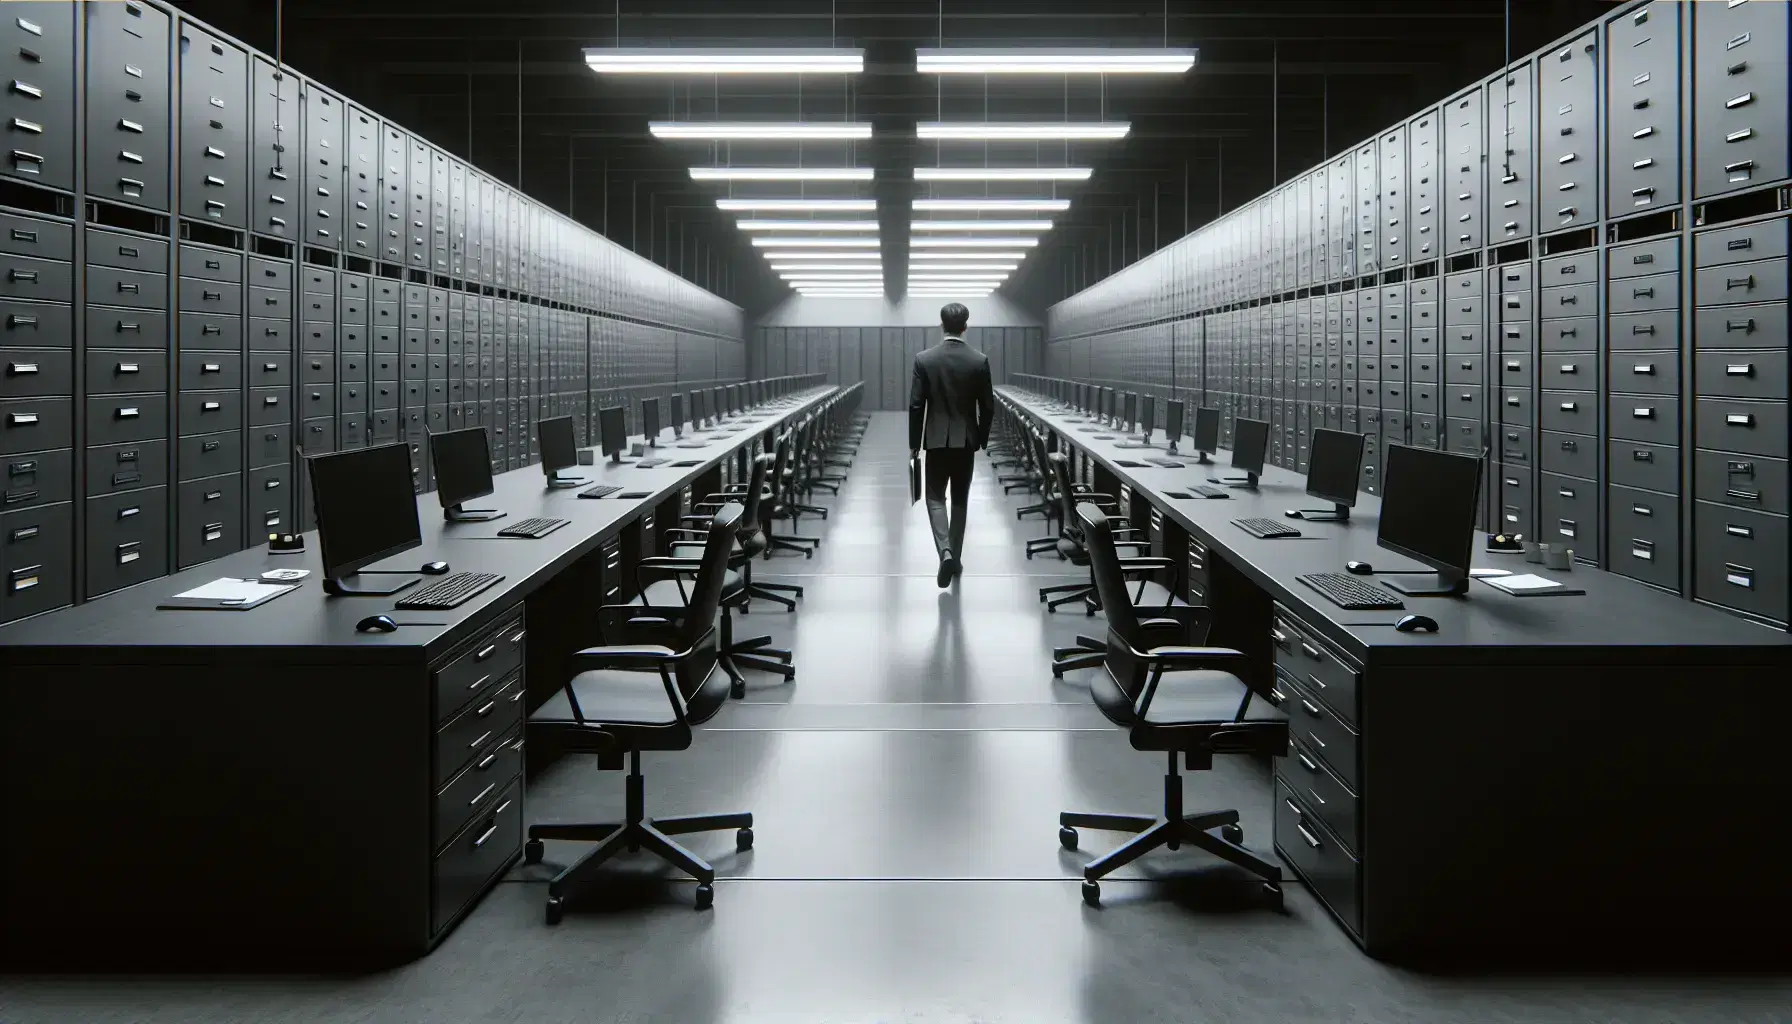 Espacio de oficina ordenado con filas de escritorios de madera oscura, sillas ergonómicas negras y monitores de computadora, bajo iluminación fluorescente.